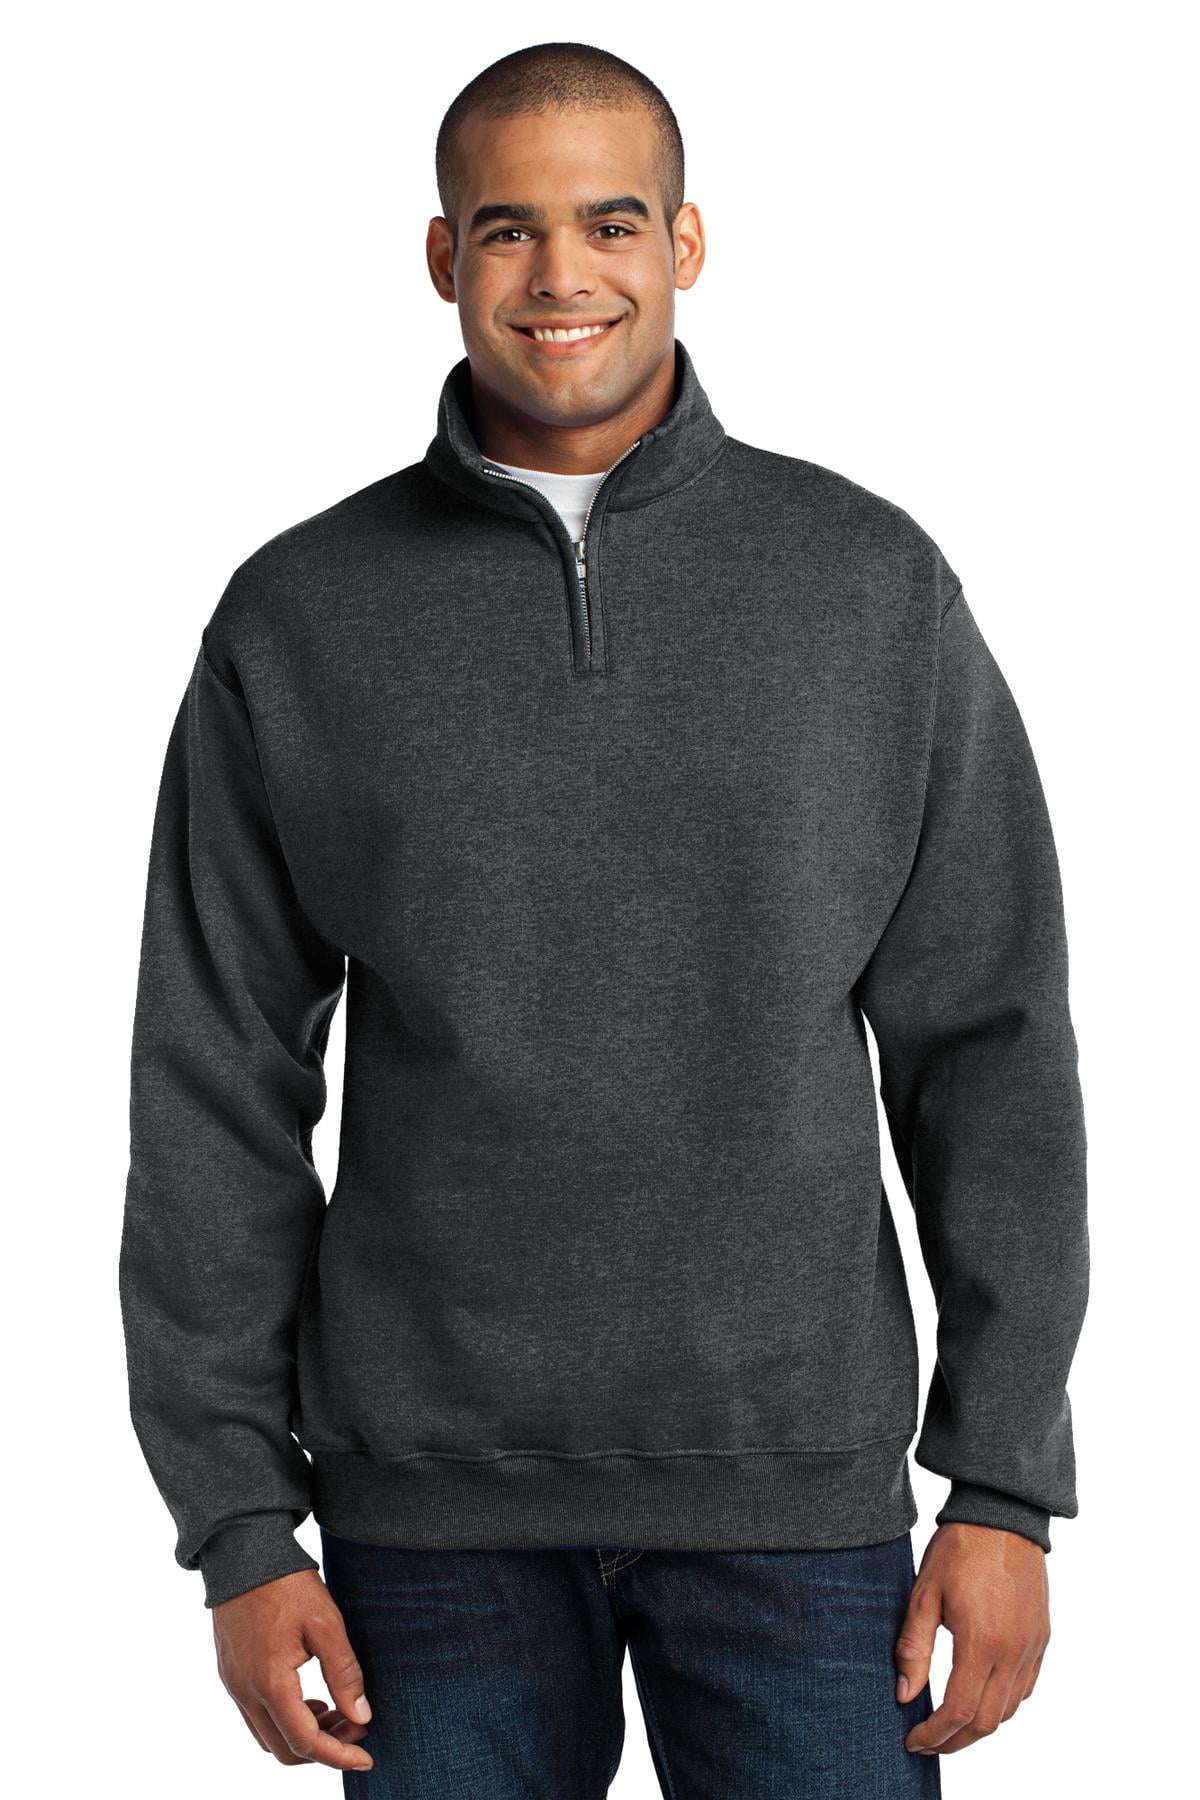 Medium Jerzees Adult NuBlend Quarter-Zip Cadet Collar Sweatshirt Black Heather 